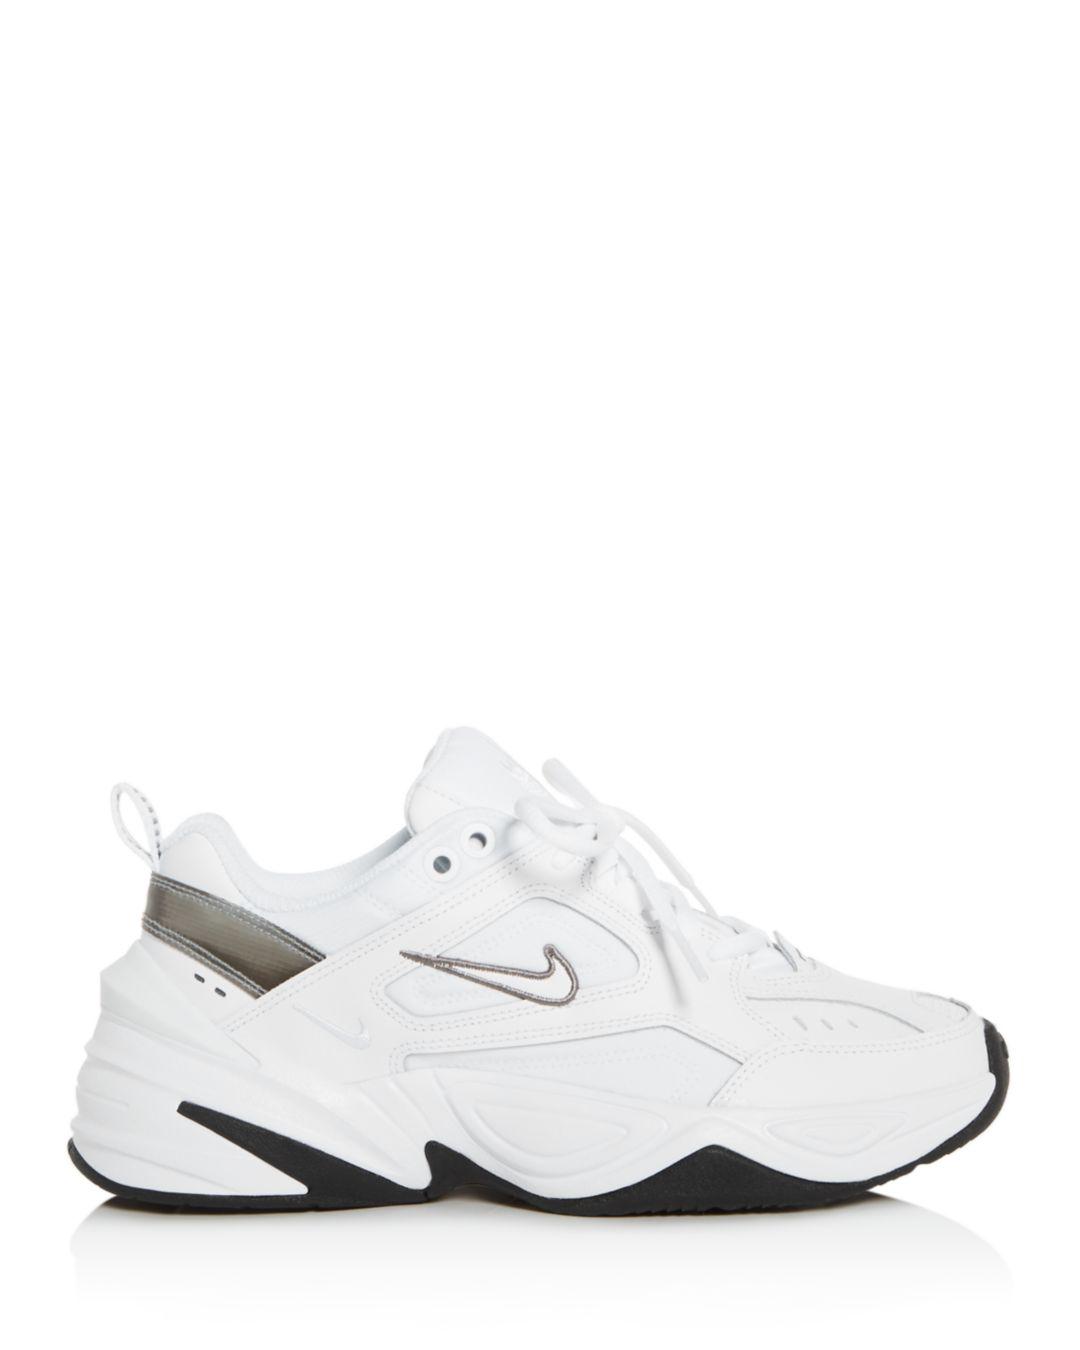 Nike Women's M2k Techno Low - Top Sneakers in White/Cool Gray/Black